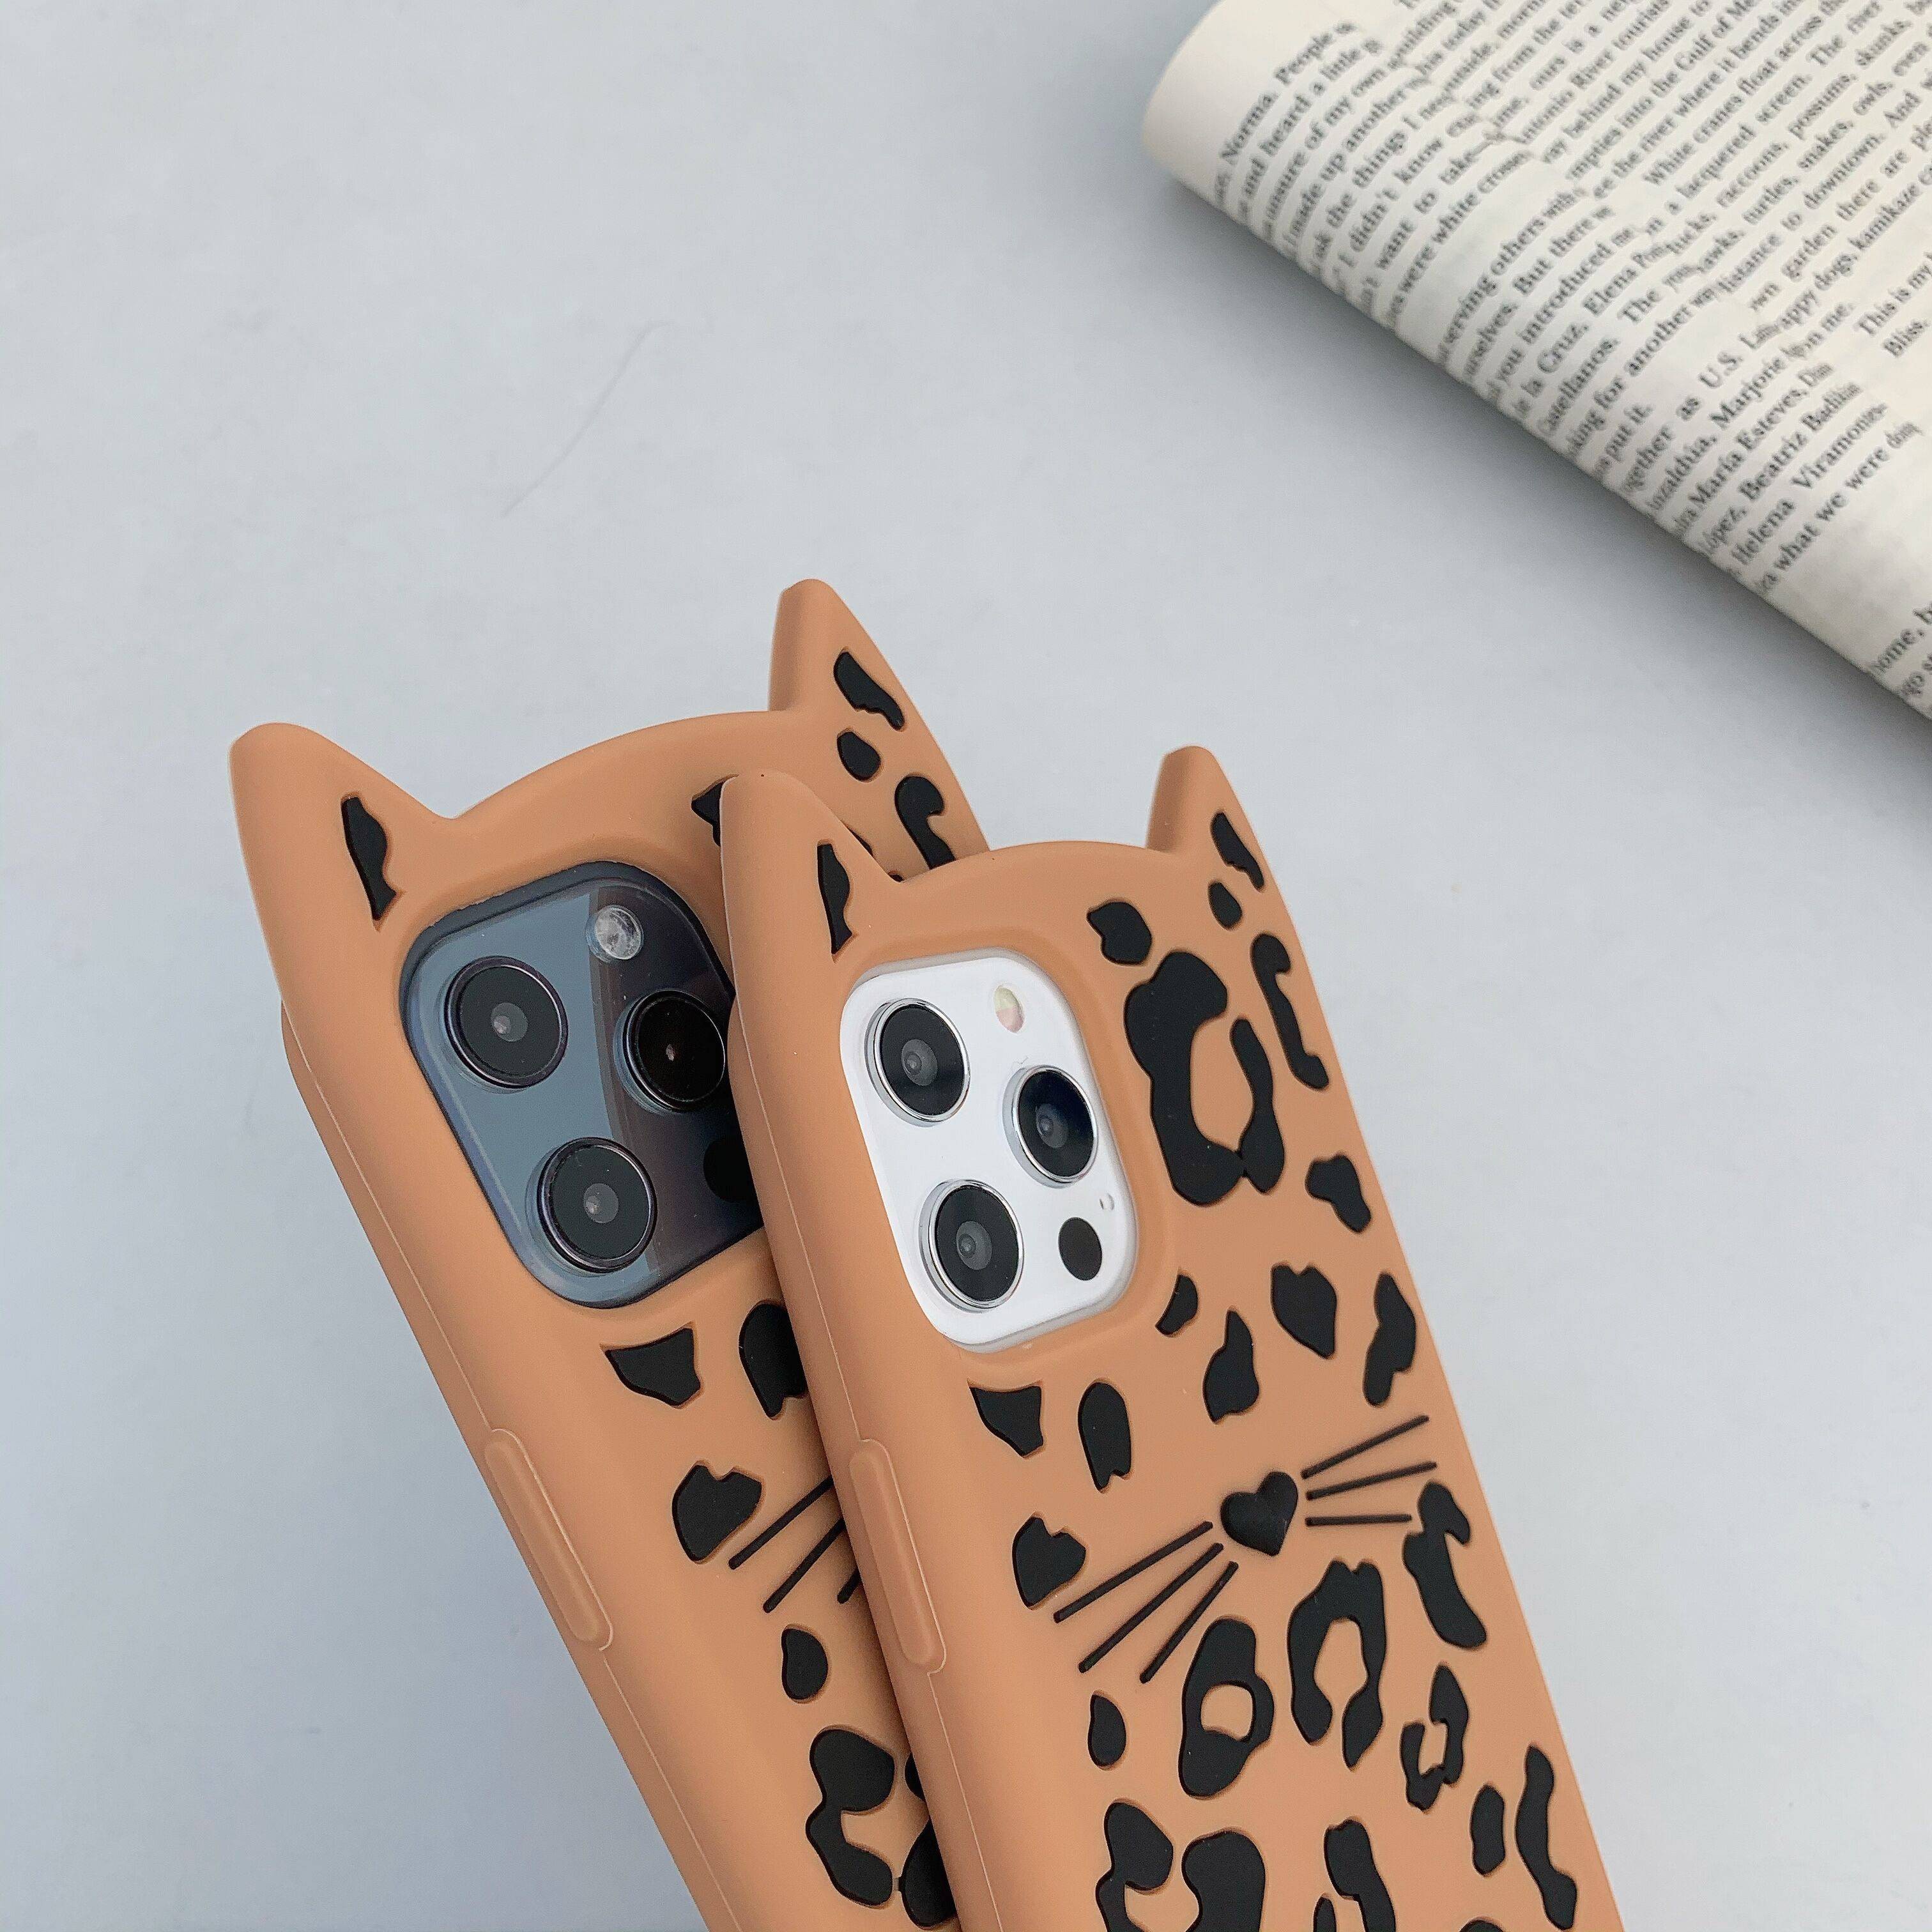 Cartoon Leopard Cat Phone Case Apple iPhone 6 6s 7 8 Plus X XR XS 11 Pro Max iPhone SE (2020) Casing Soft Silicone Cover Bag